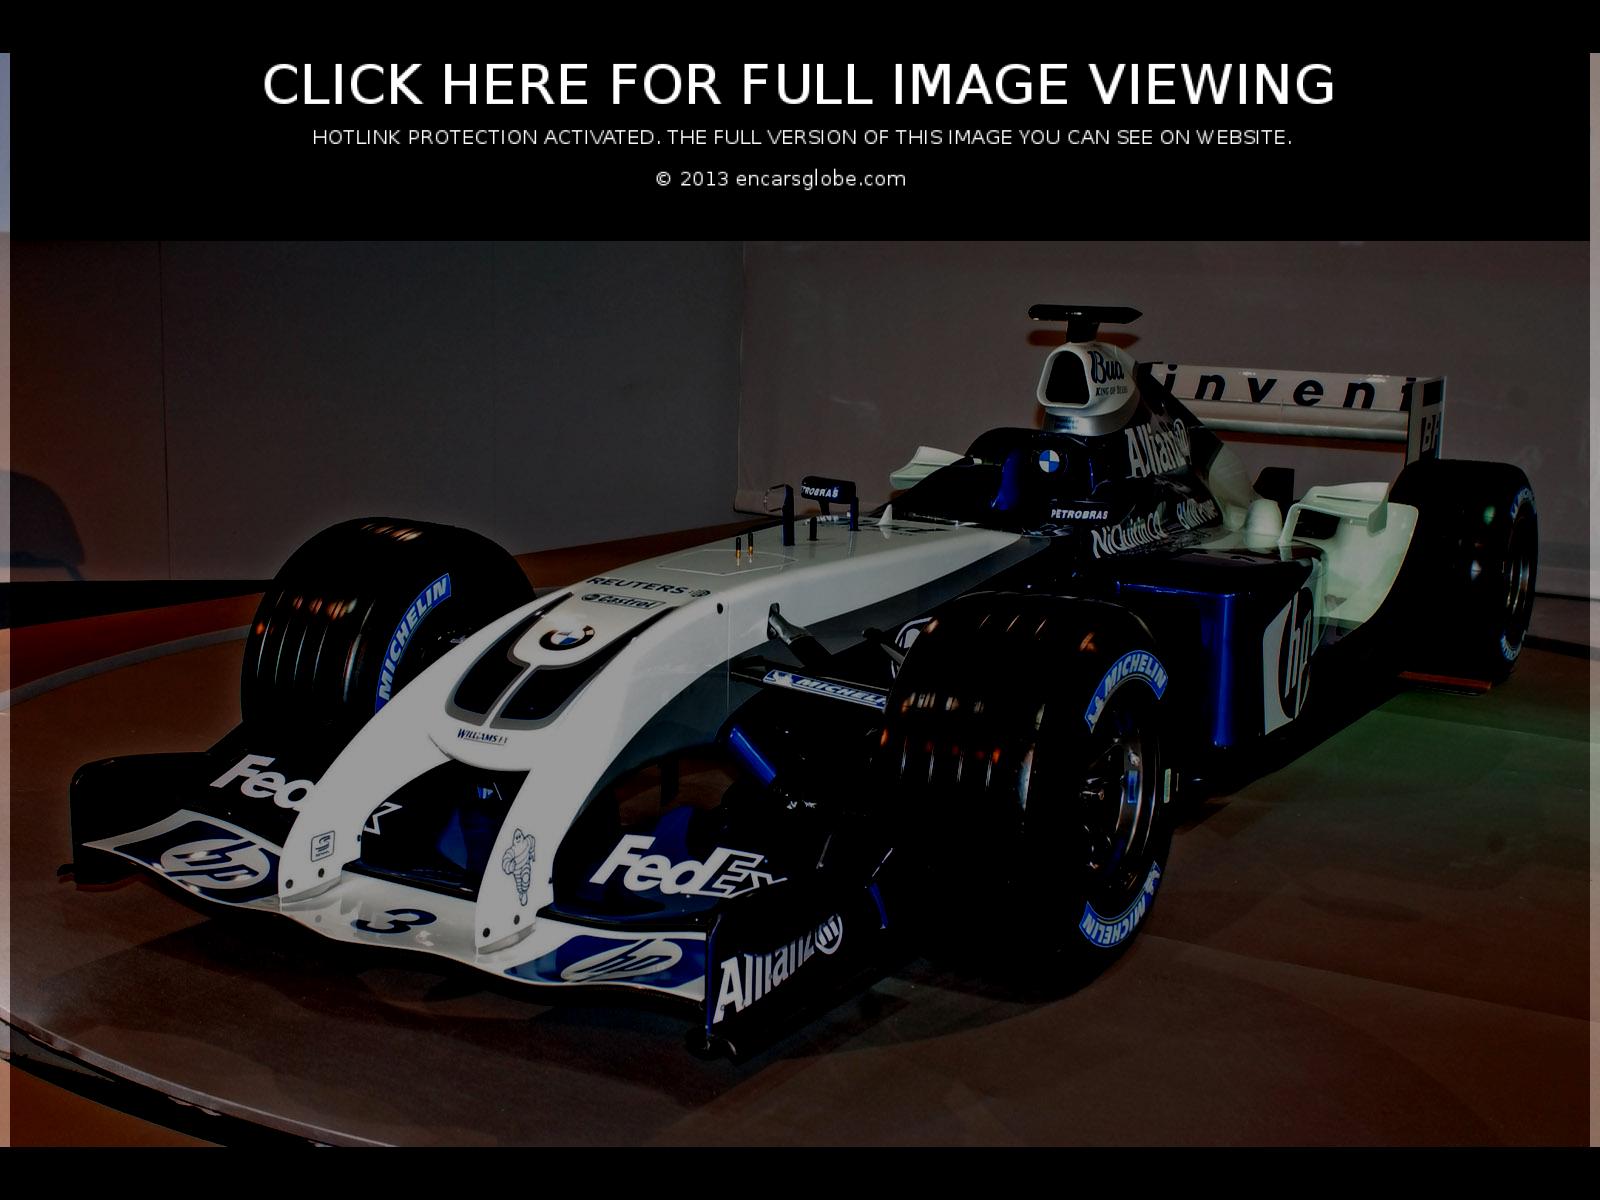 Formule BMW (13 images):